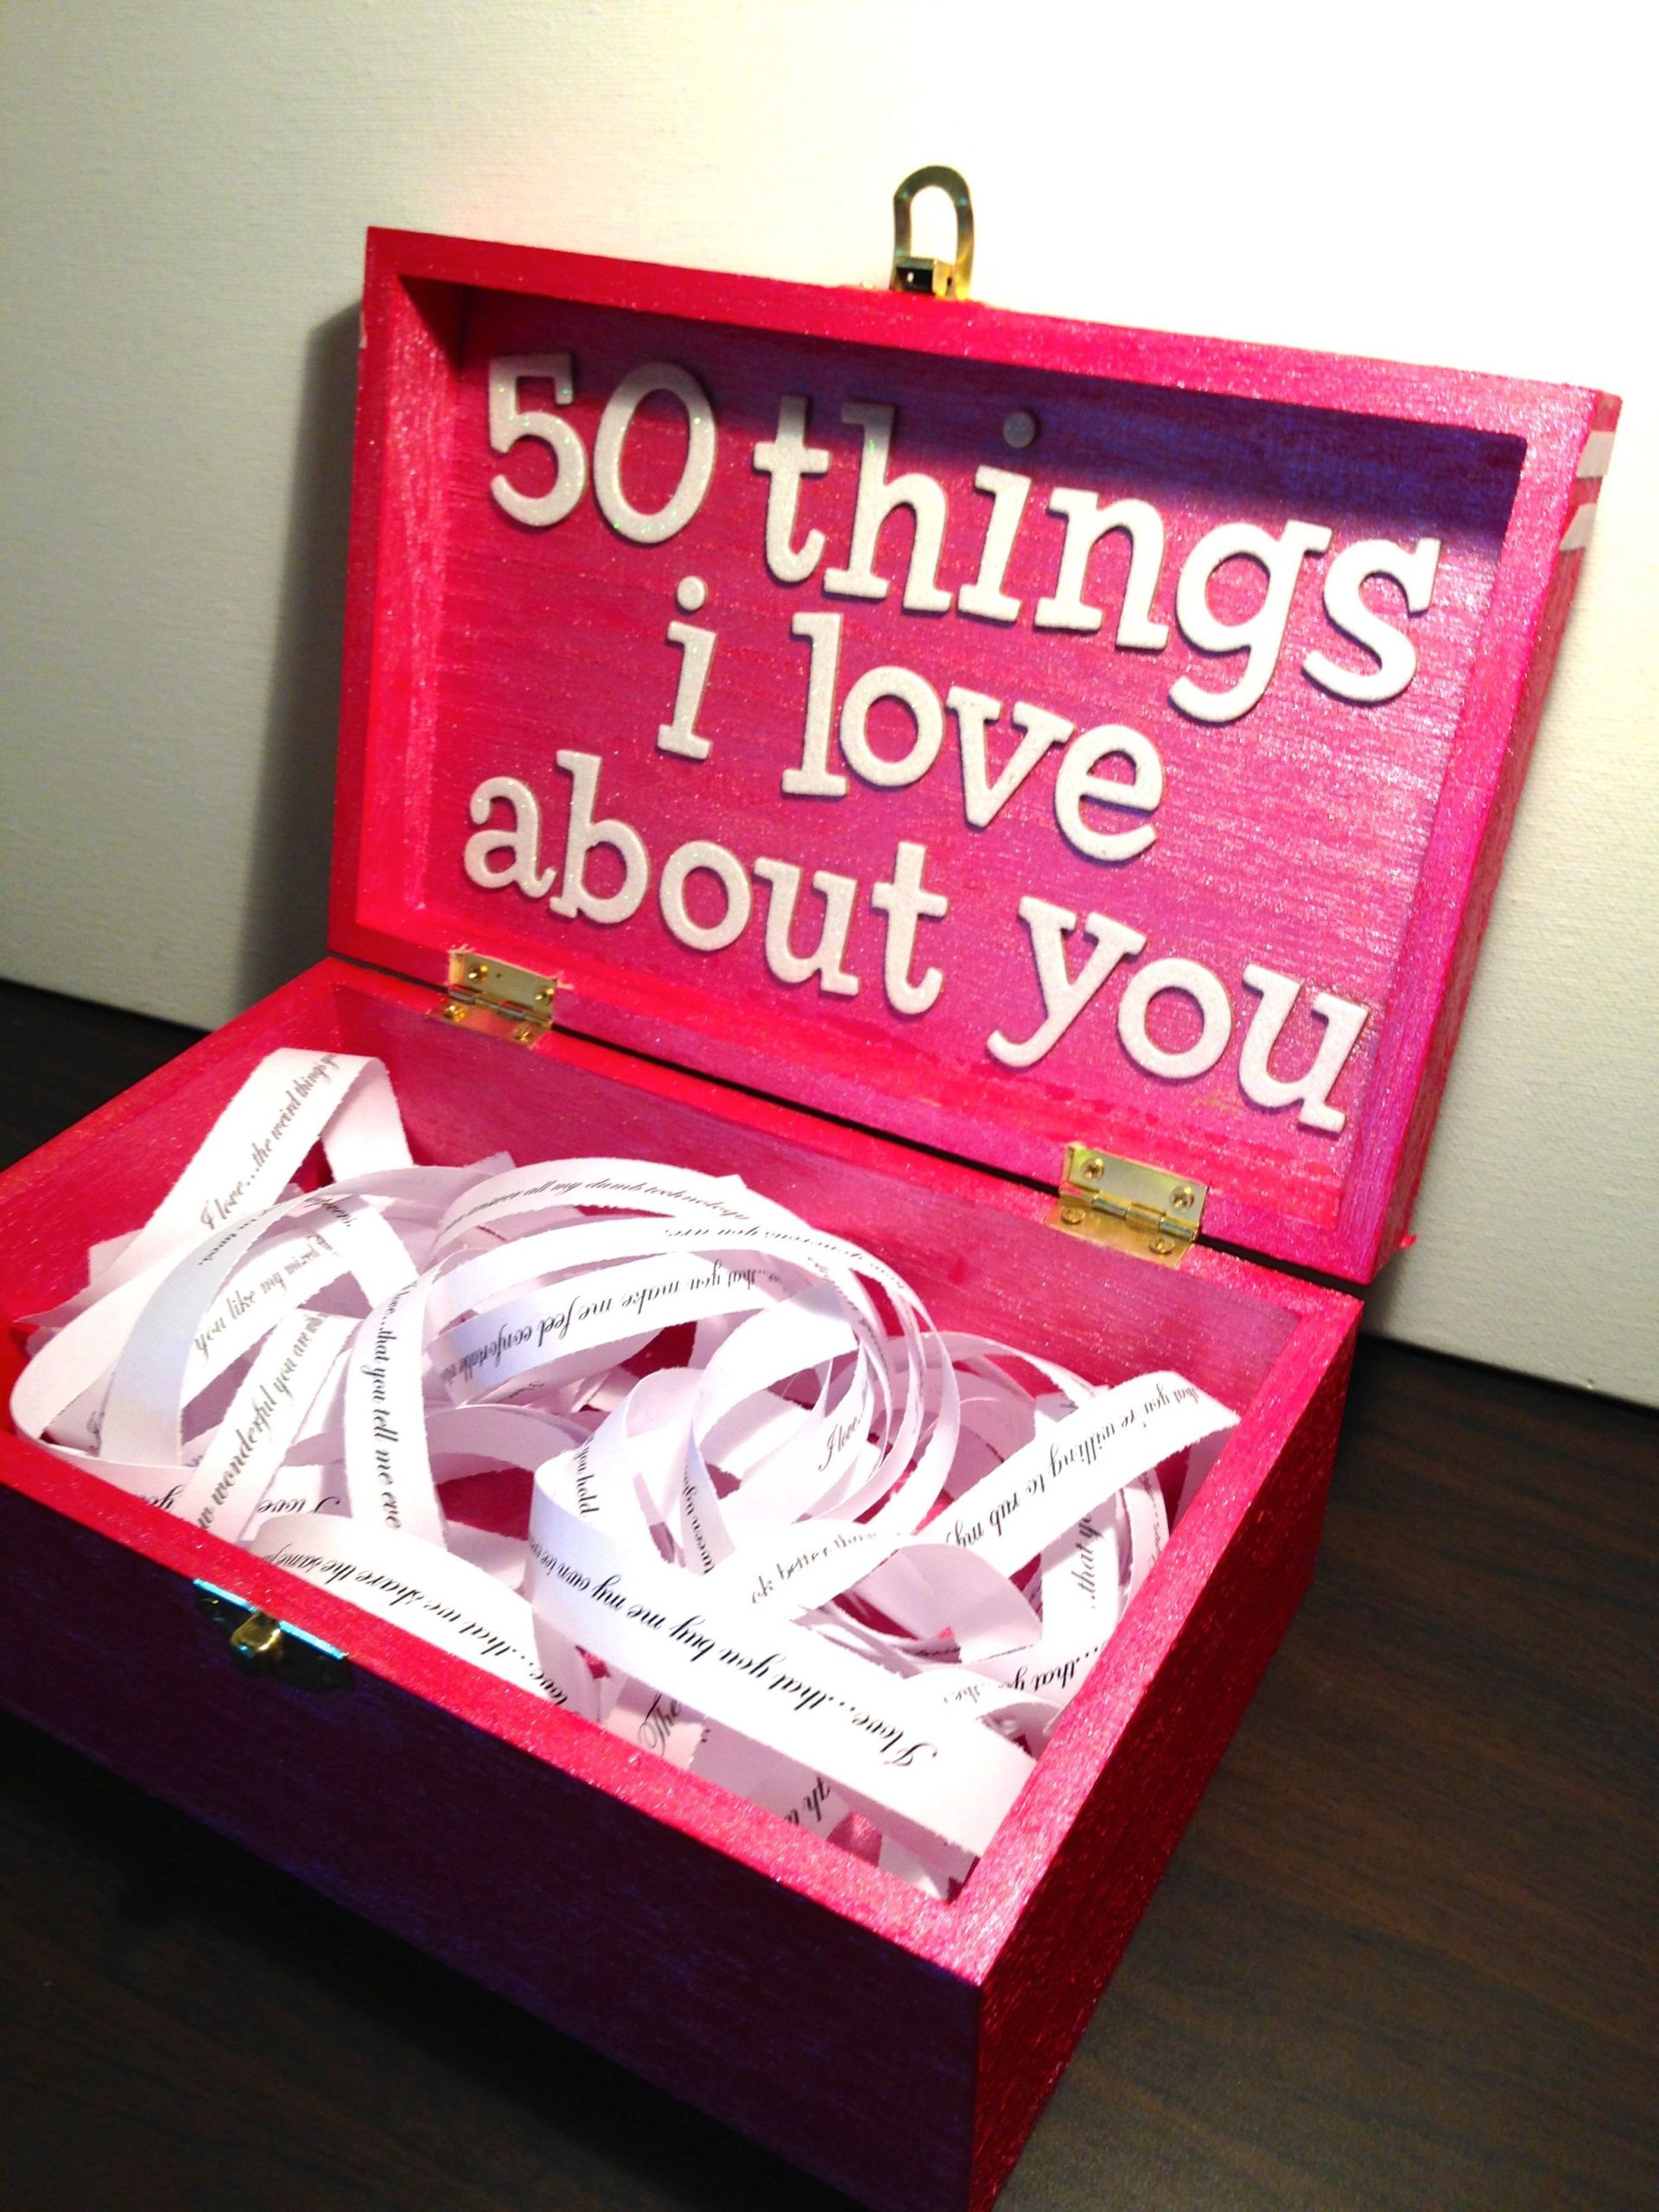 Girlfriends Birthday Gift Ideas
 Boyfriend Girlfriend t ideas for birthday valentine s or just a random t A box with 50